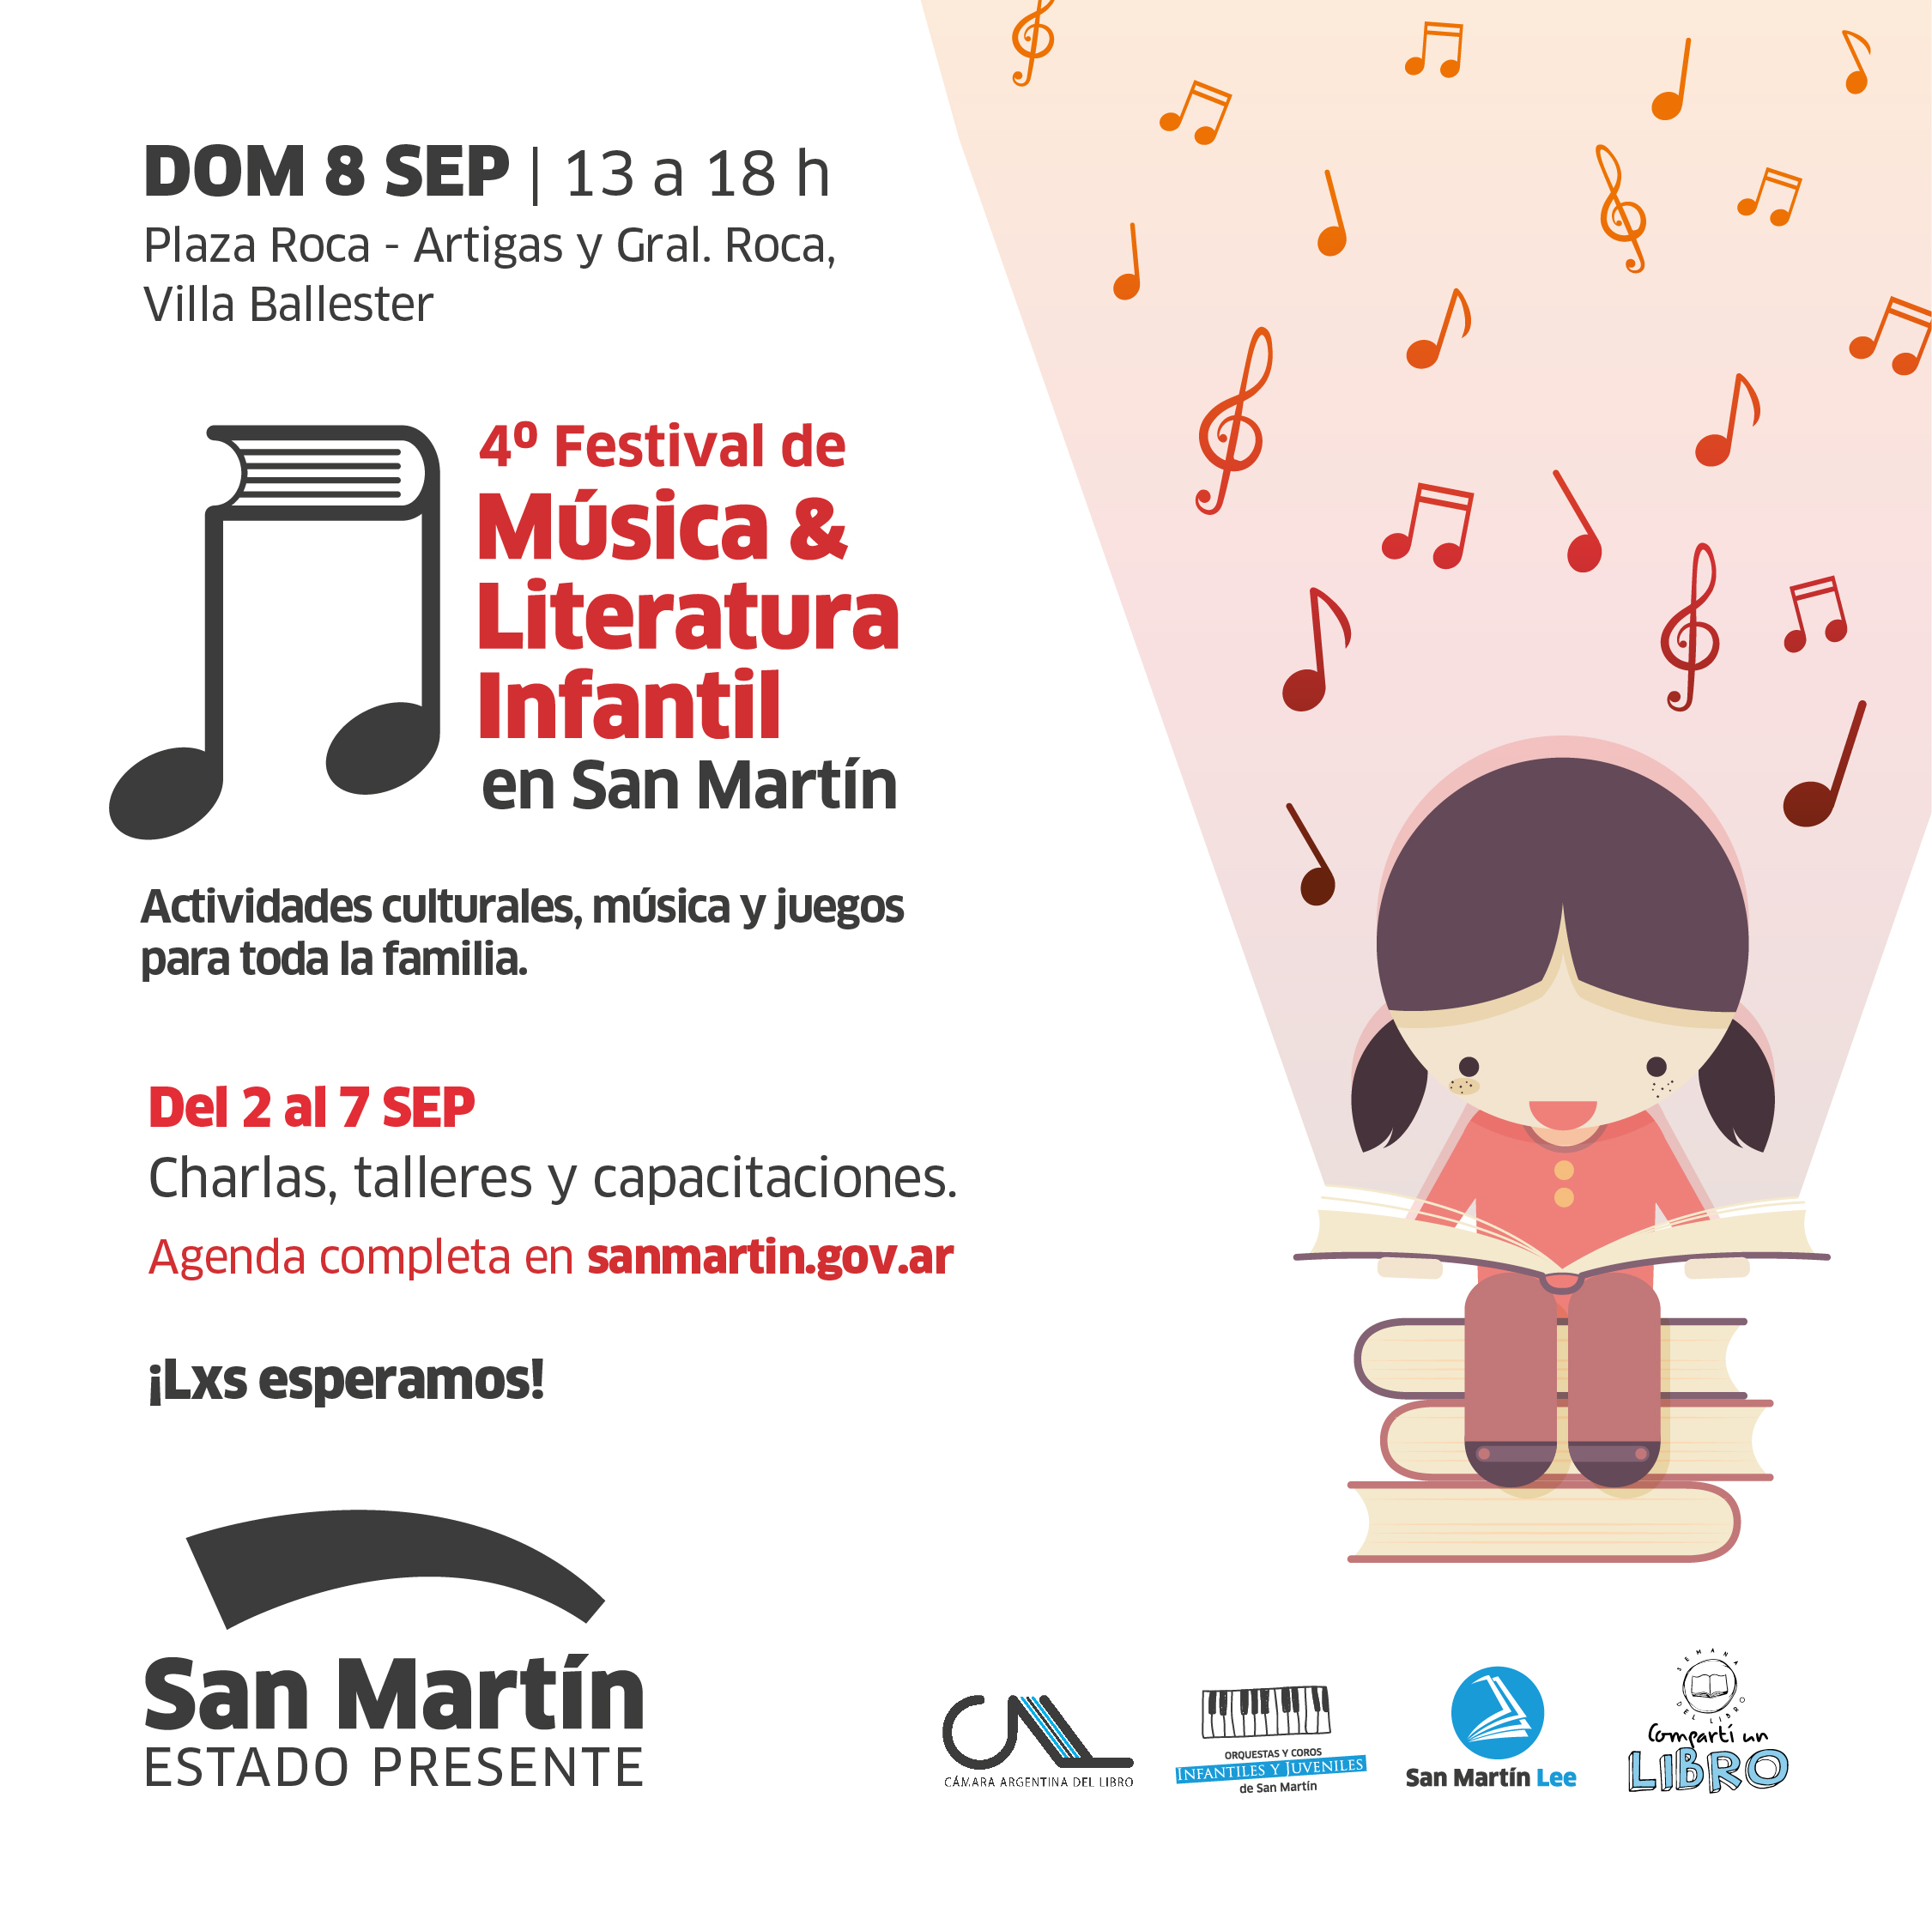  En septiembre, llega el 4° Festival de Música y Literatura Infantil